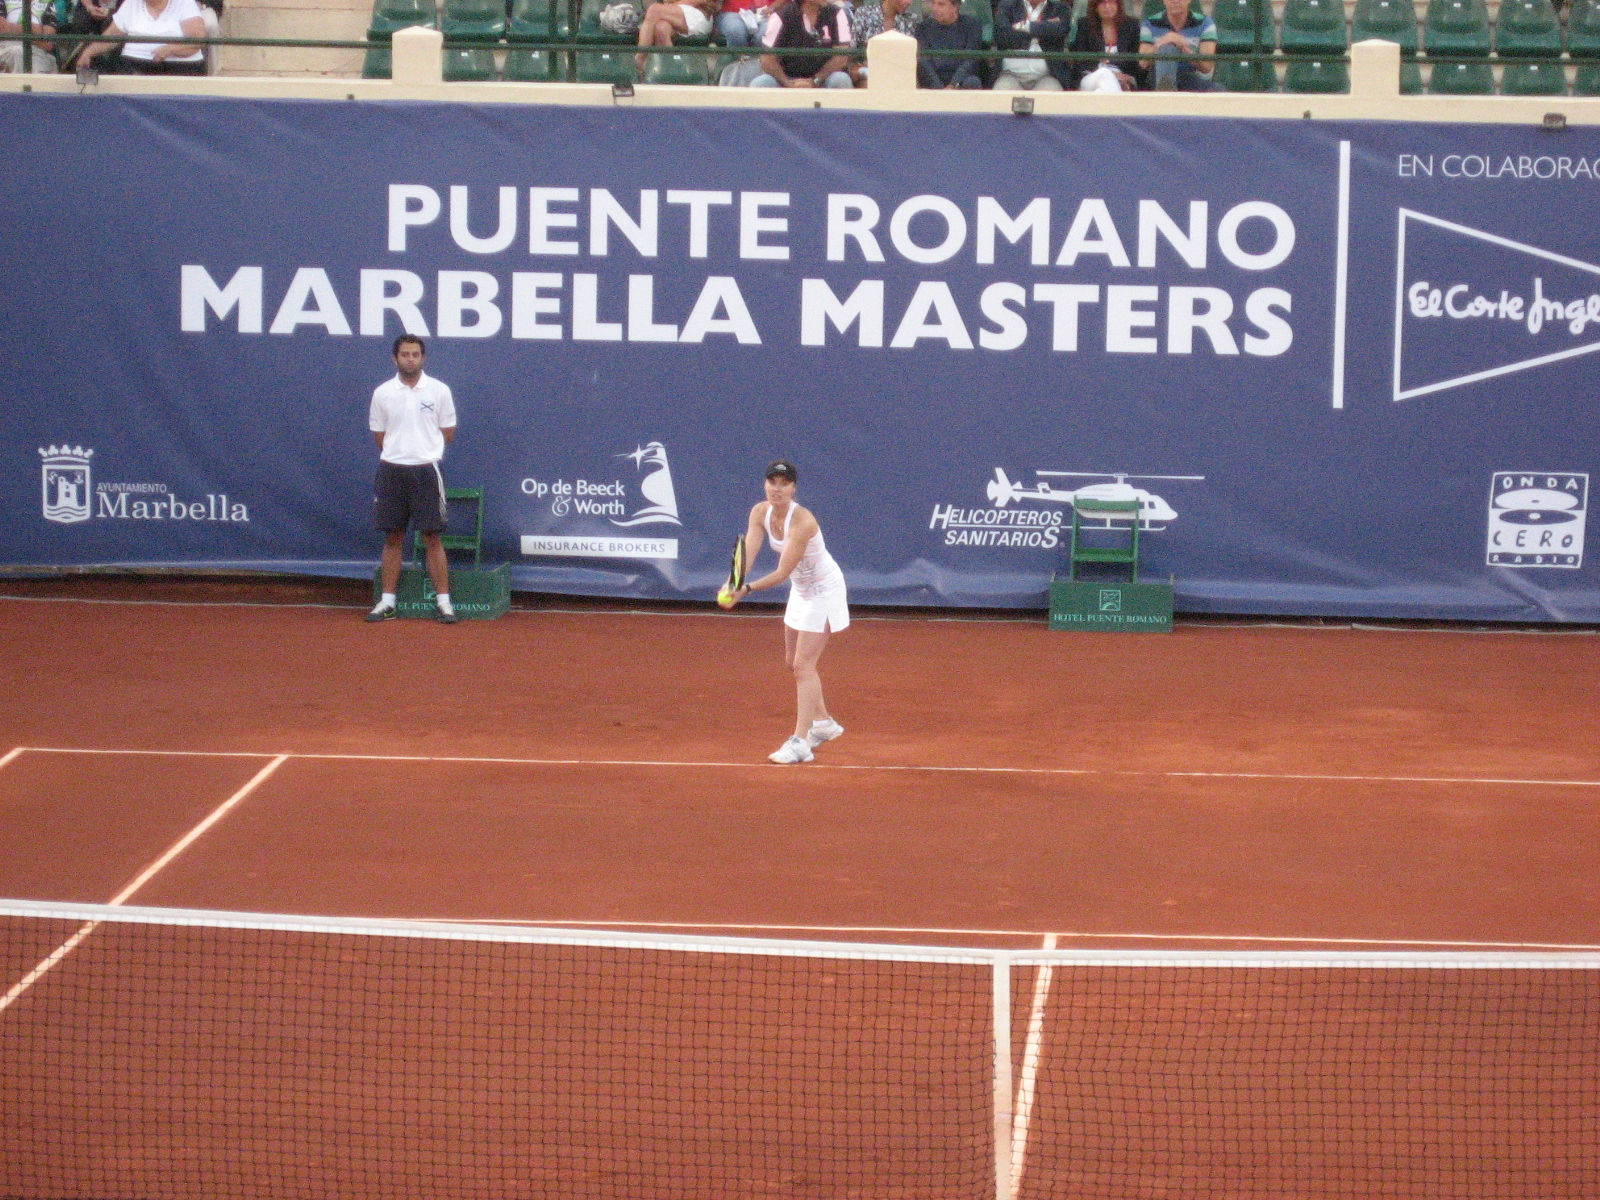 Martina Hingis on clay court at Puente Romano Marbella Masters 2010